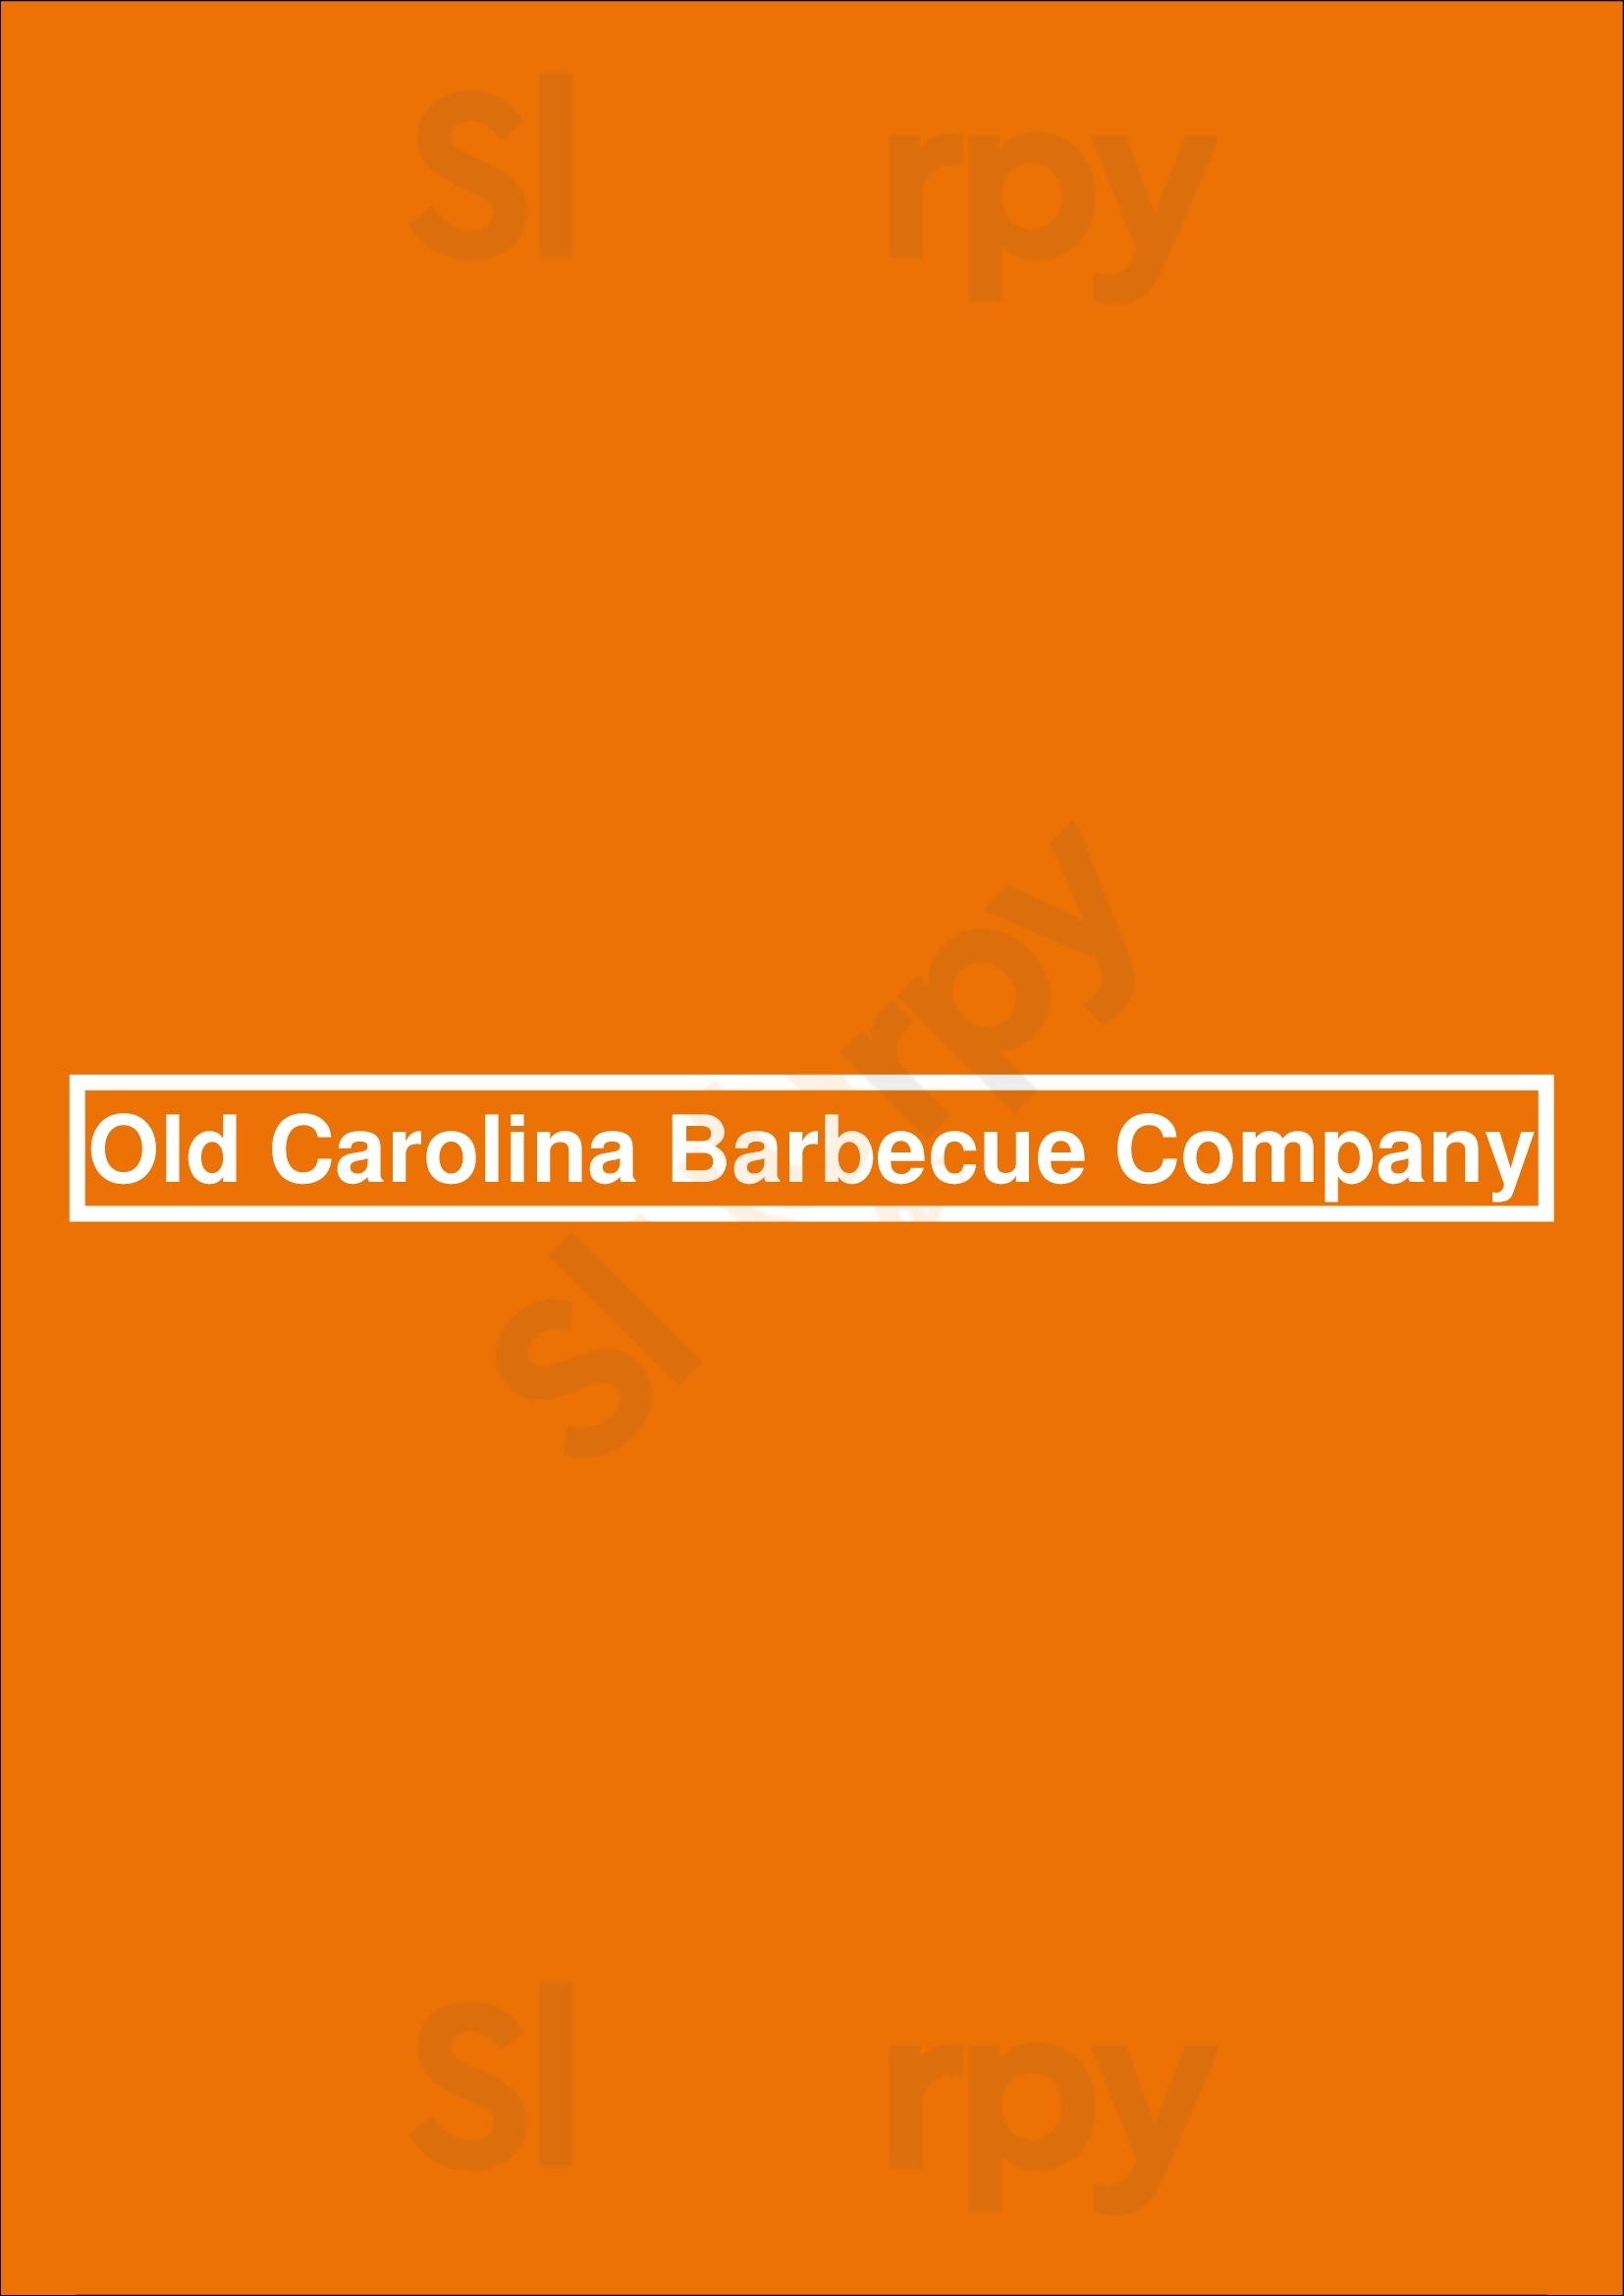 Old Carolina Barbecue Company Canton Menu - 1